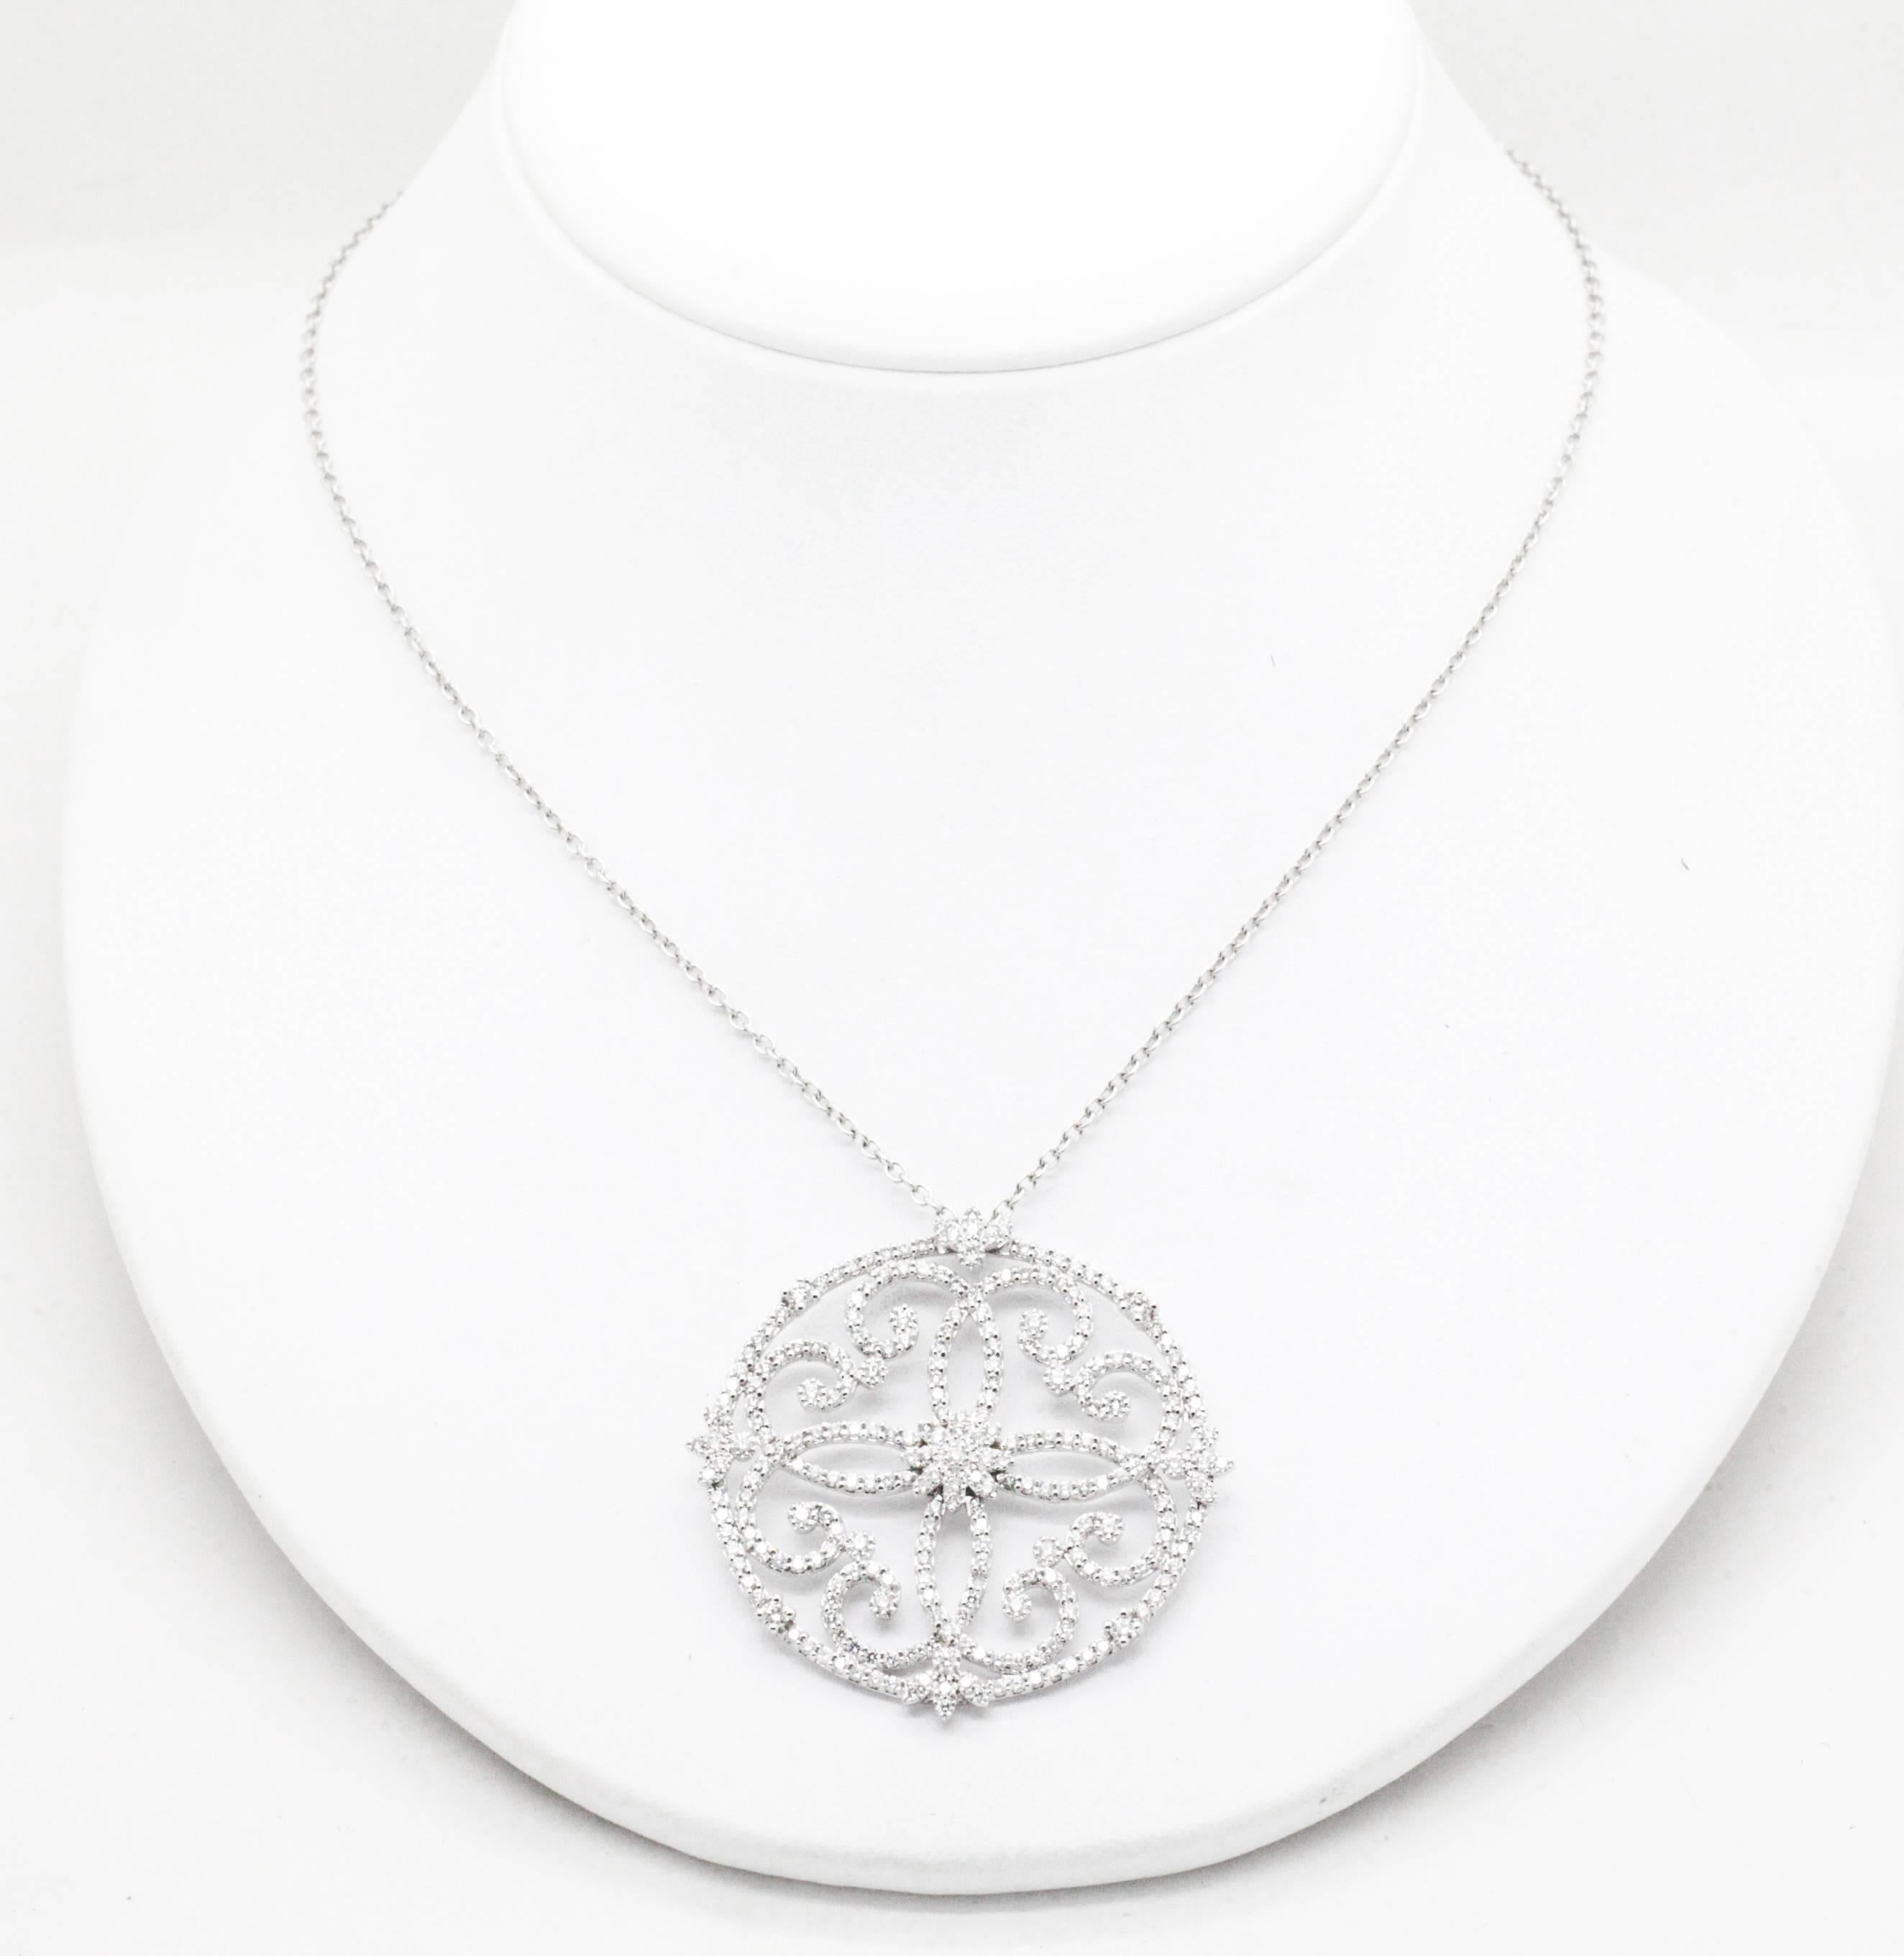 Ferrucci & Co. Diamond Necklace in 18 Karat White Gold, Handmade in Italy 4